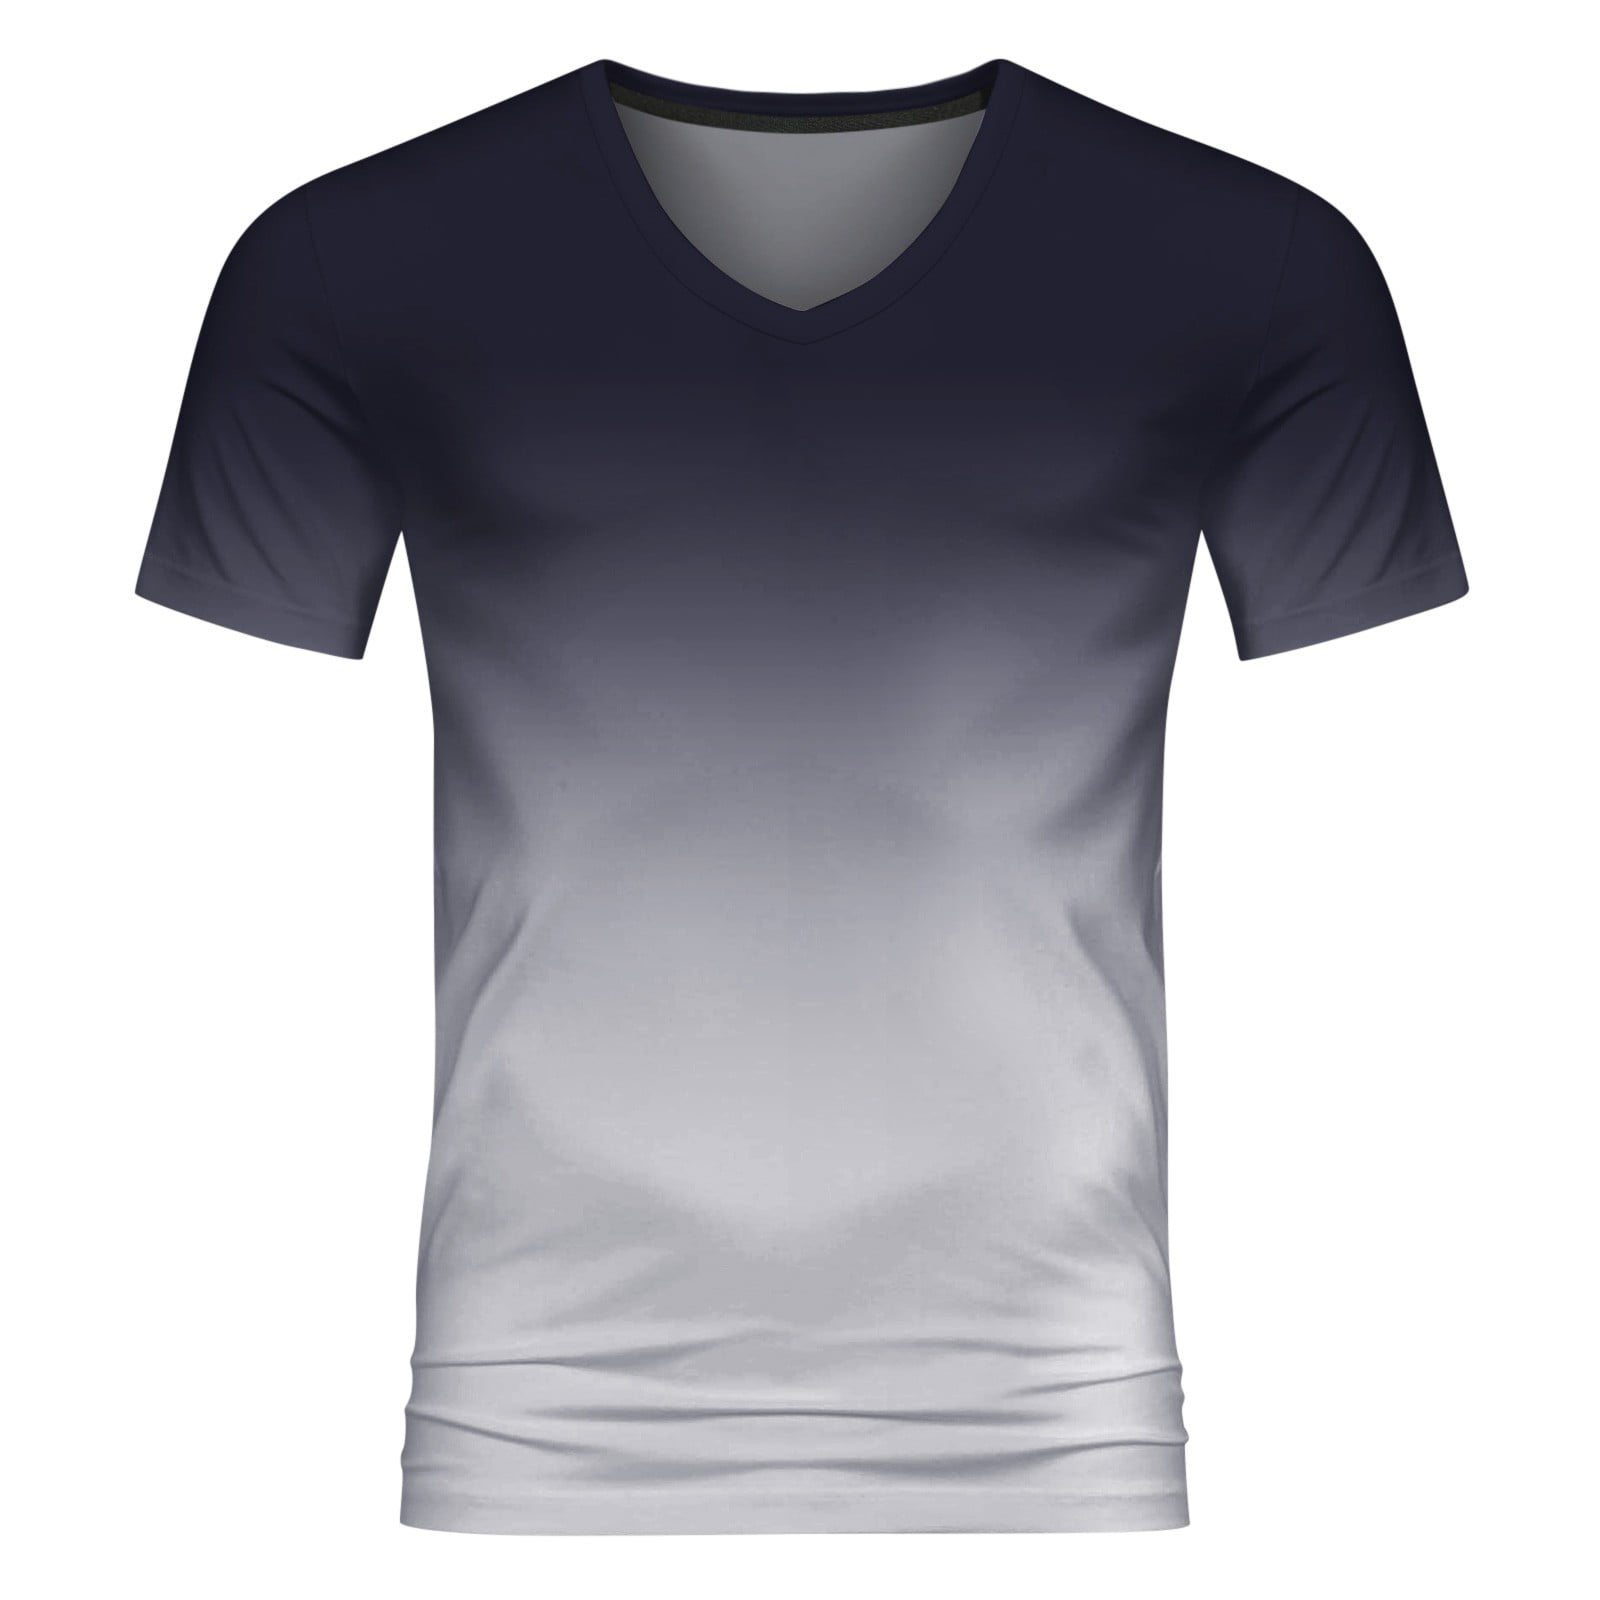 Gubotare Mens Workout Shirts Shirt for Men Fashion Heartbeat